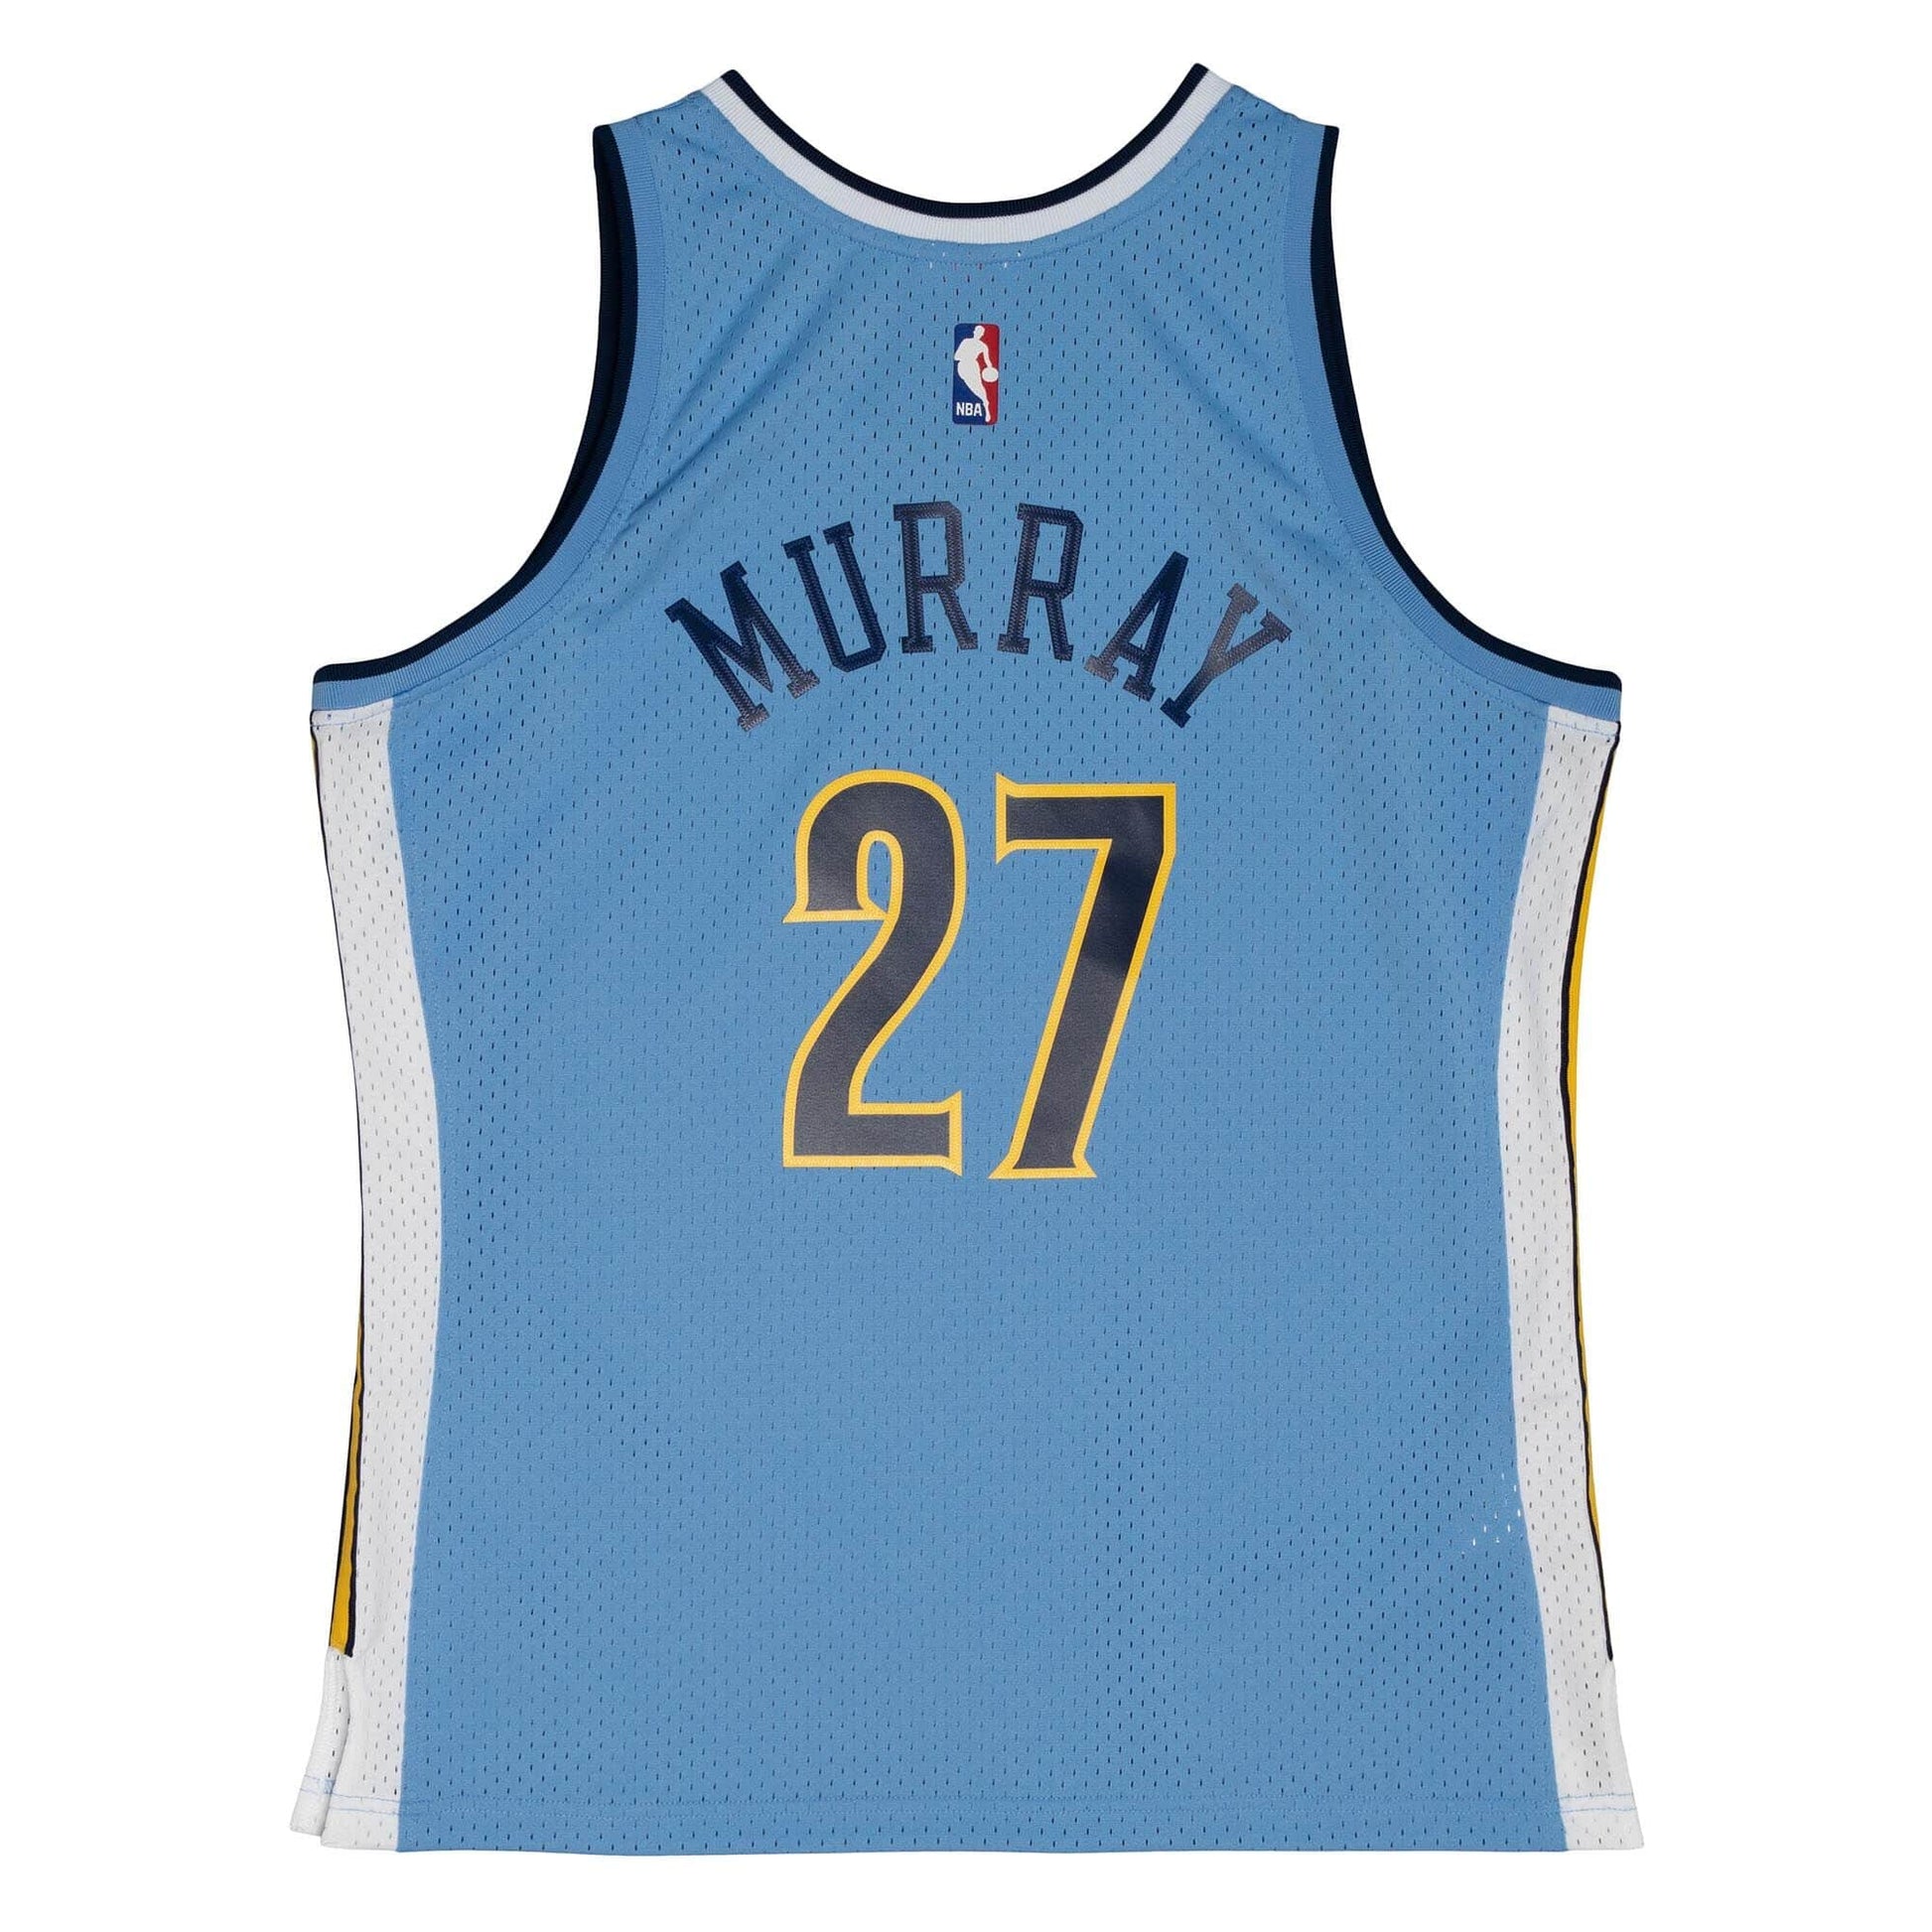 Denver Nuggets Earned Edition Jersey Men's Jamal Murray 27 Swingman  Basketball Shirt White 2021